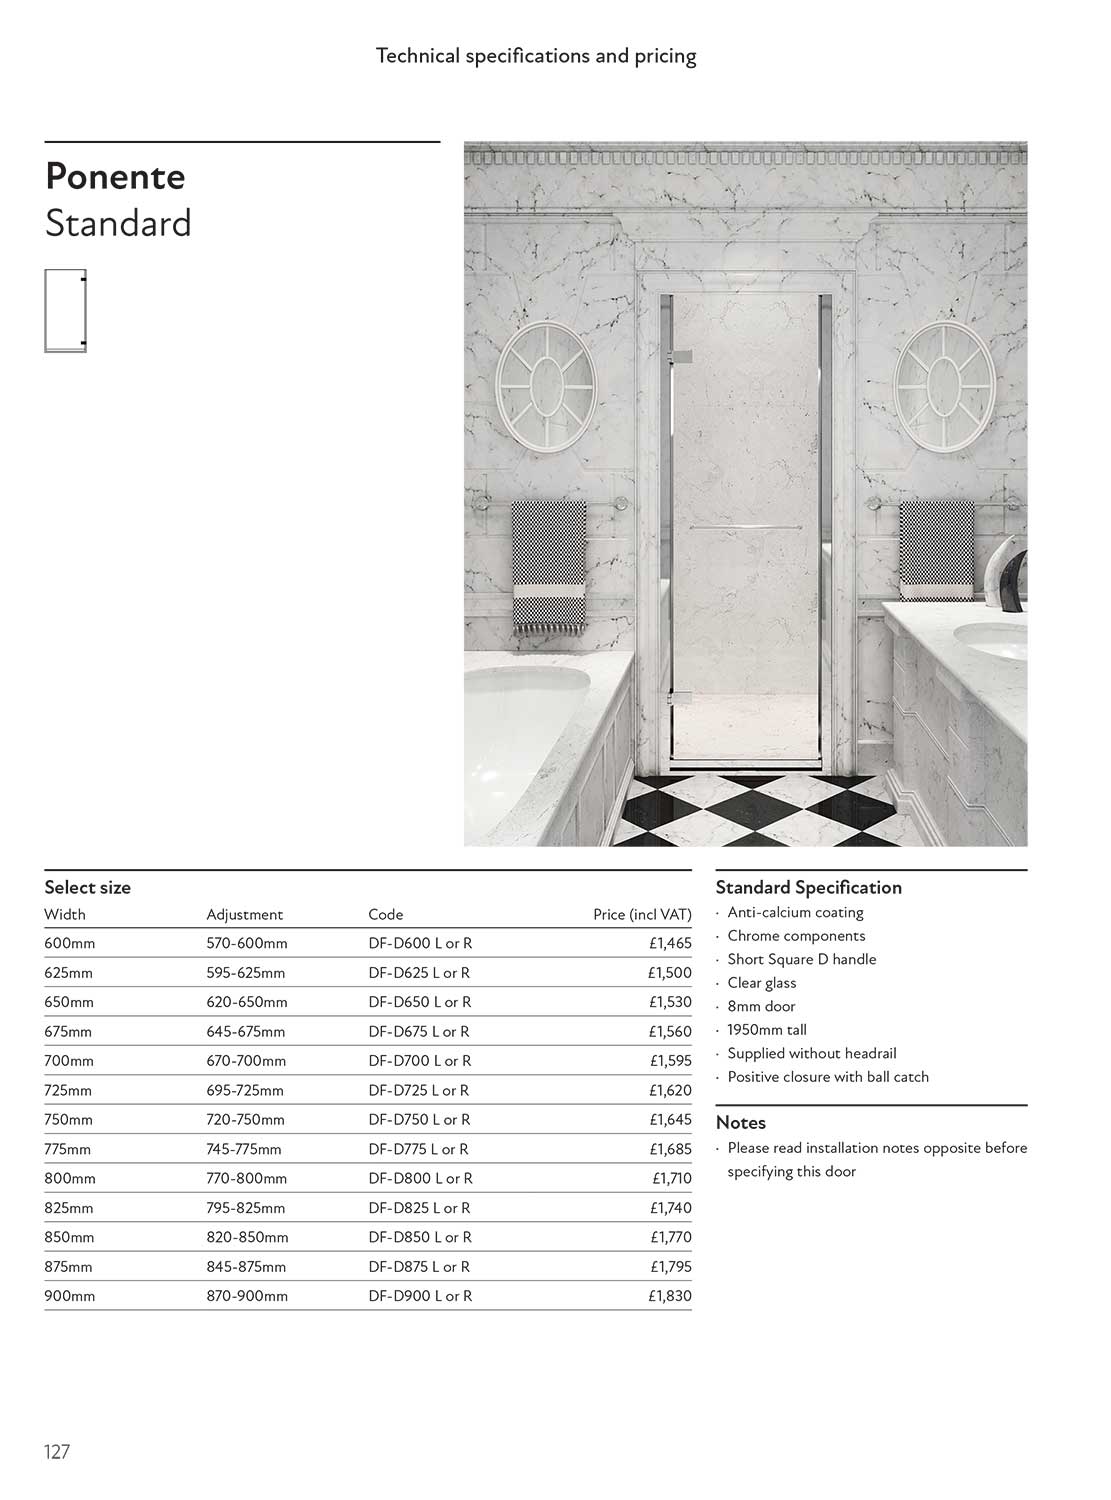 Ponente Standard brochure page